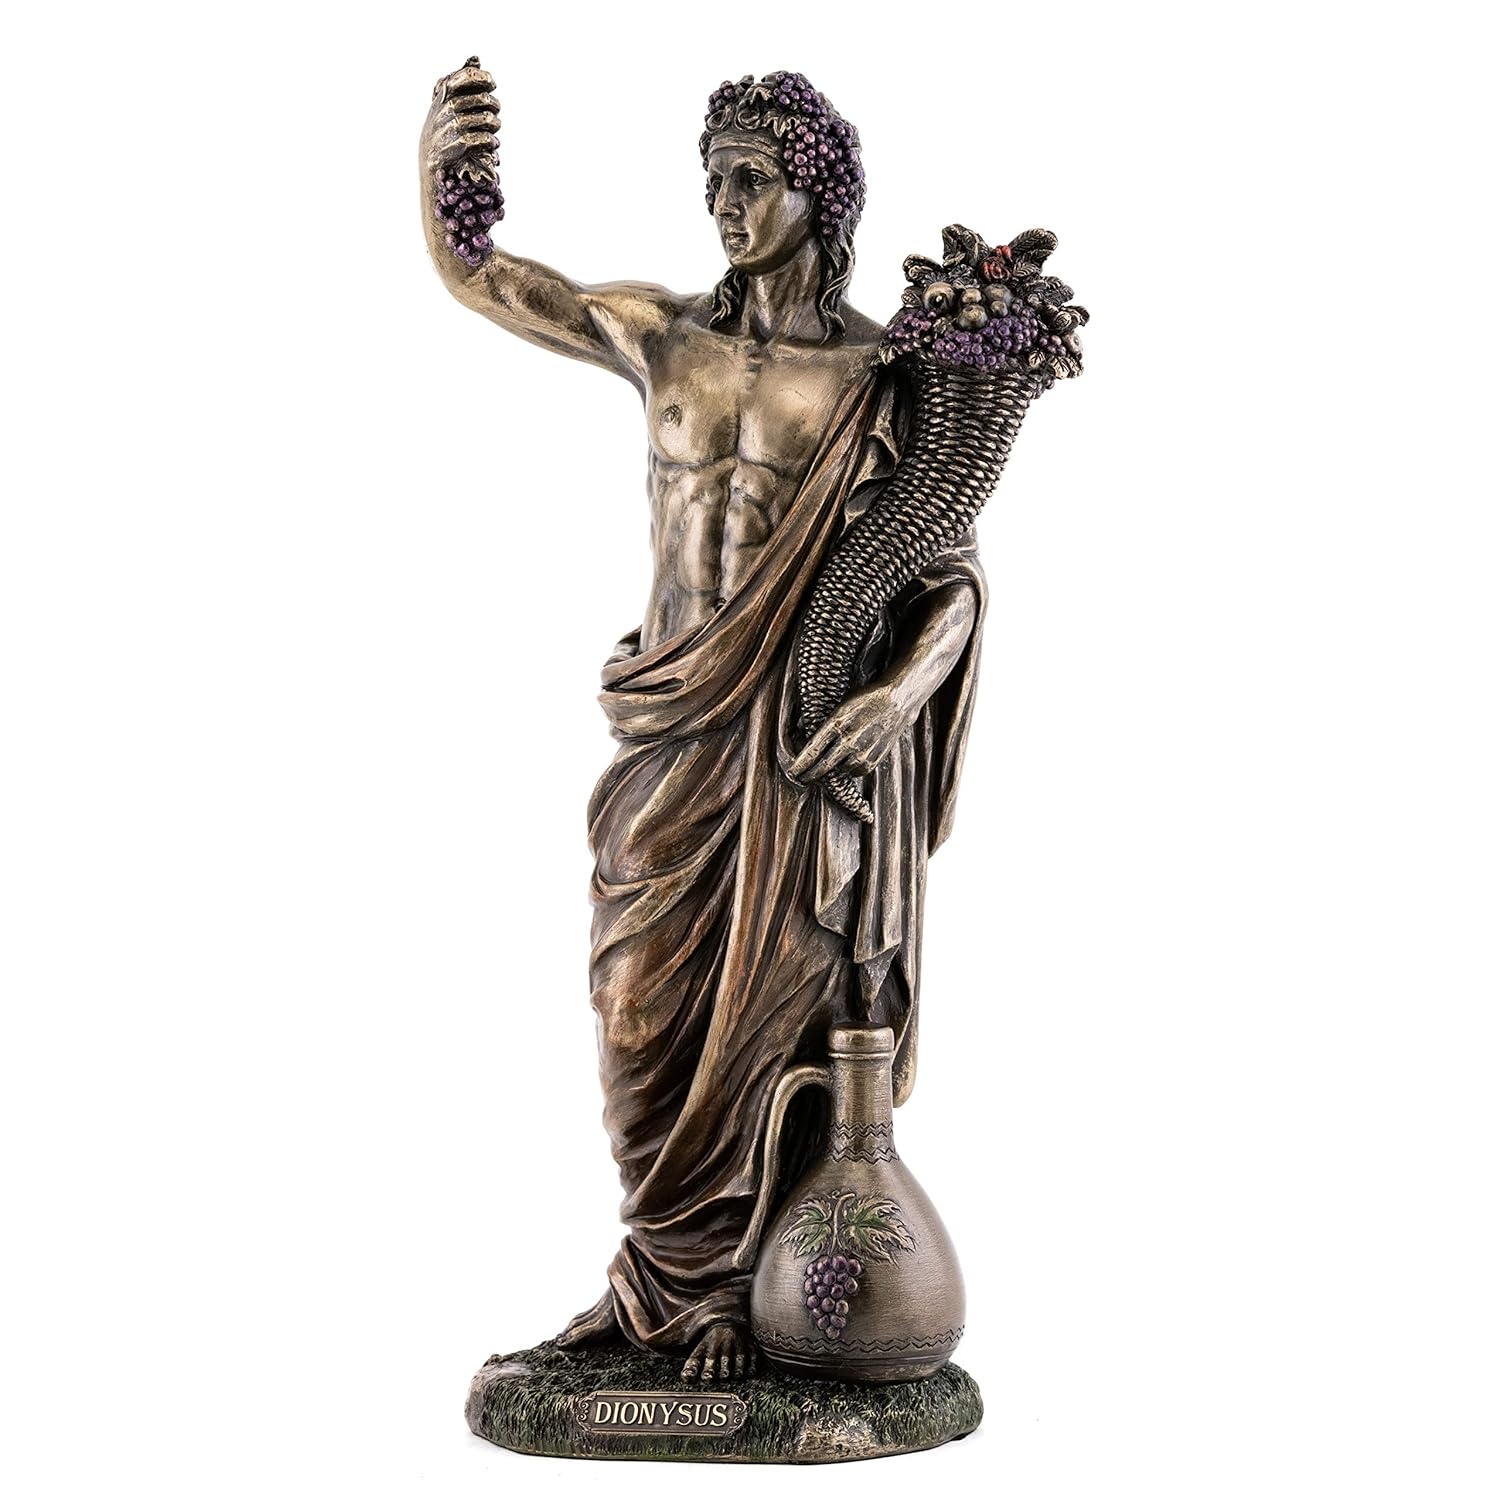 Dionysus Statue: Greek God Of Wine & Revelry